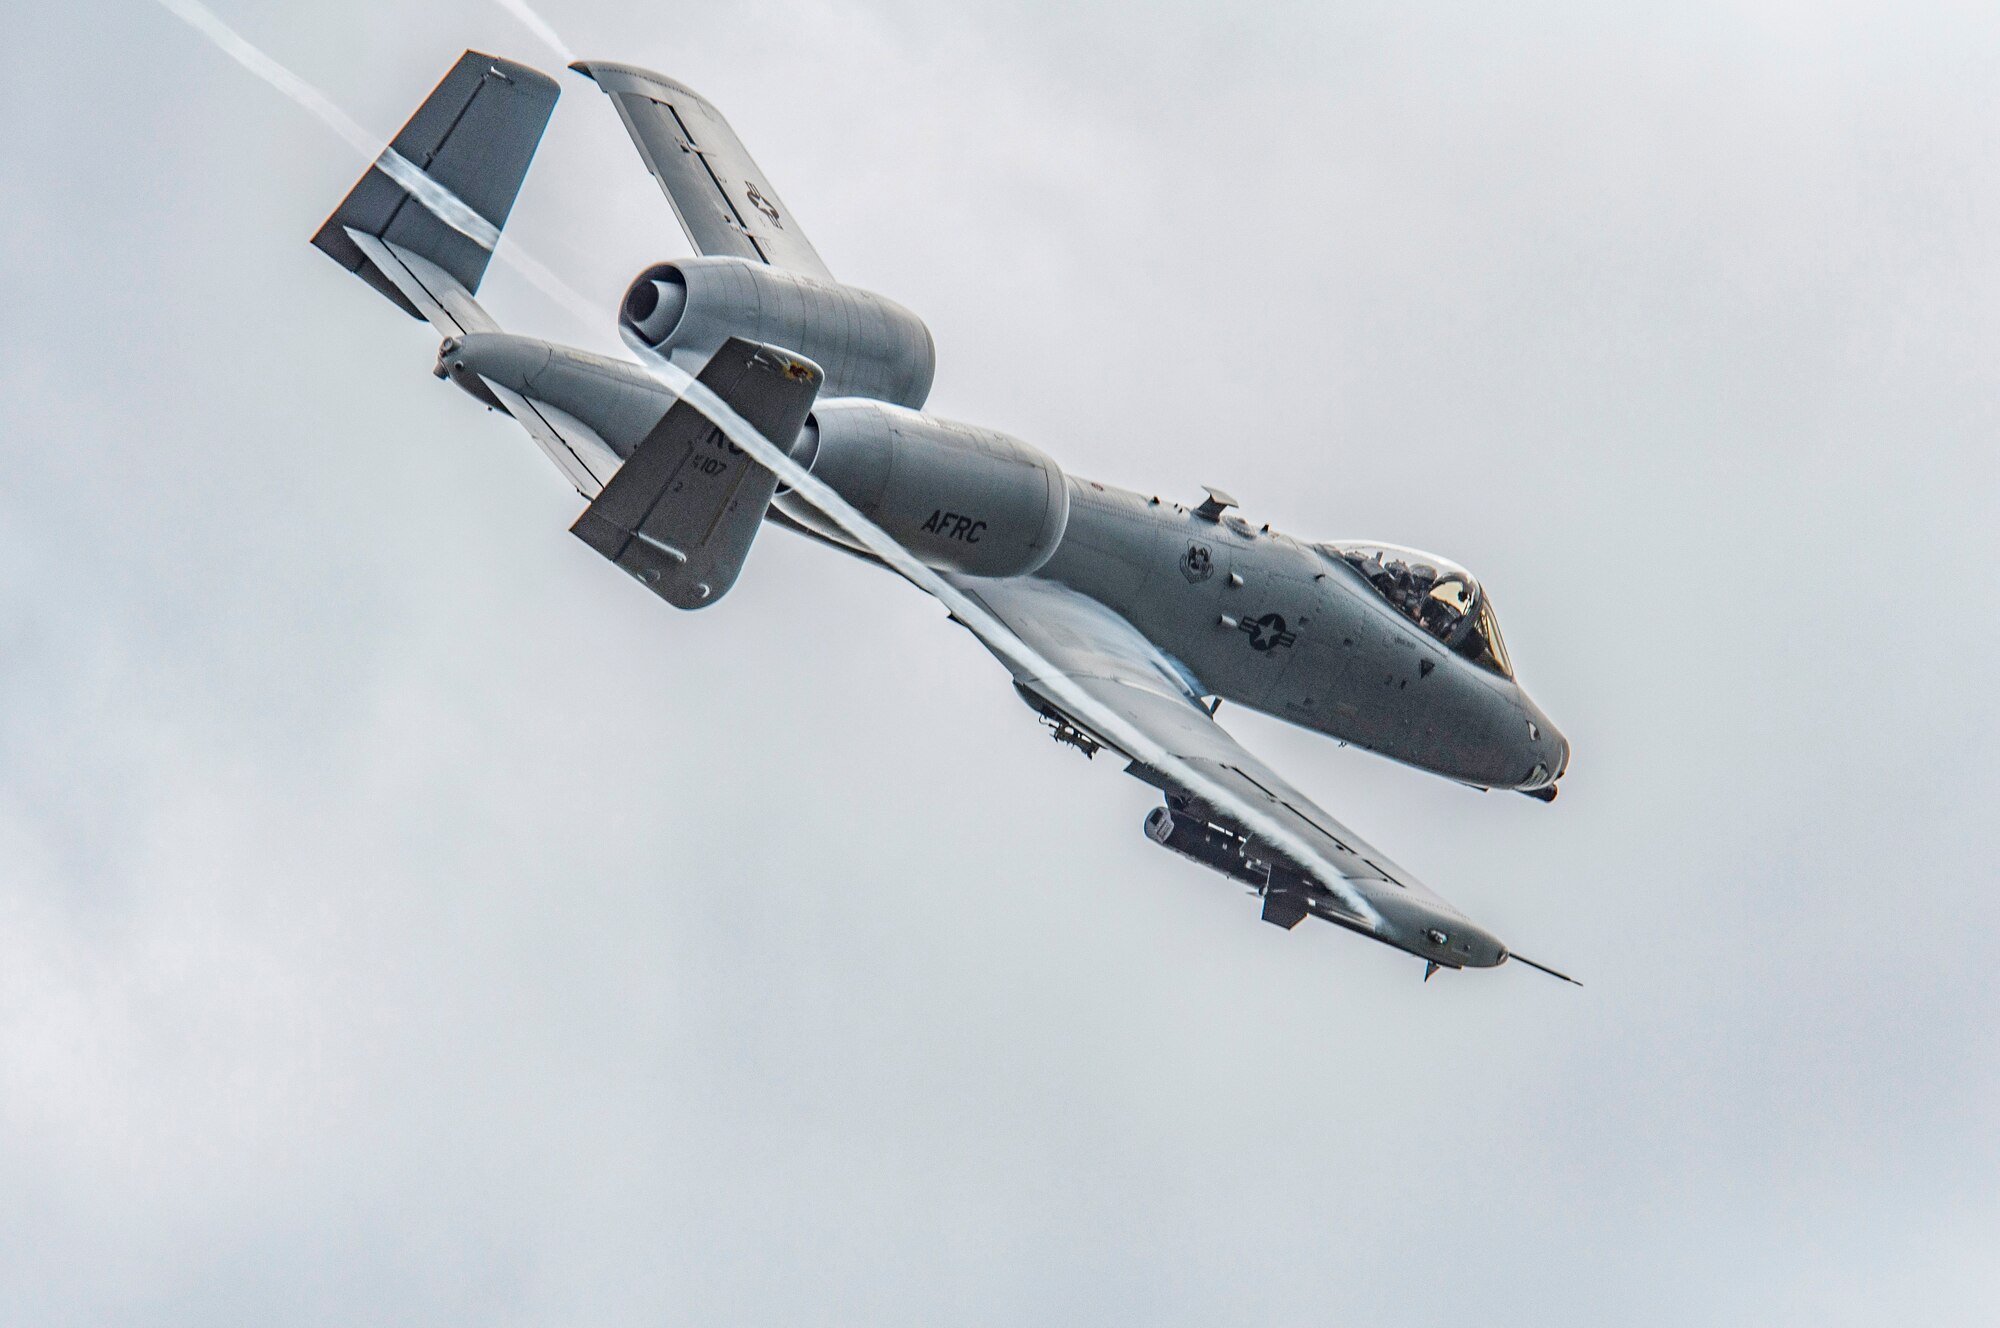 A-10 Thunderbolt over Cannon Range